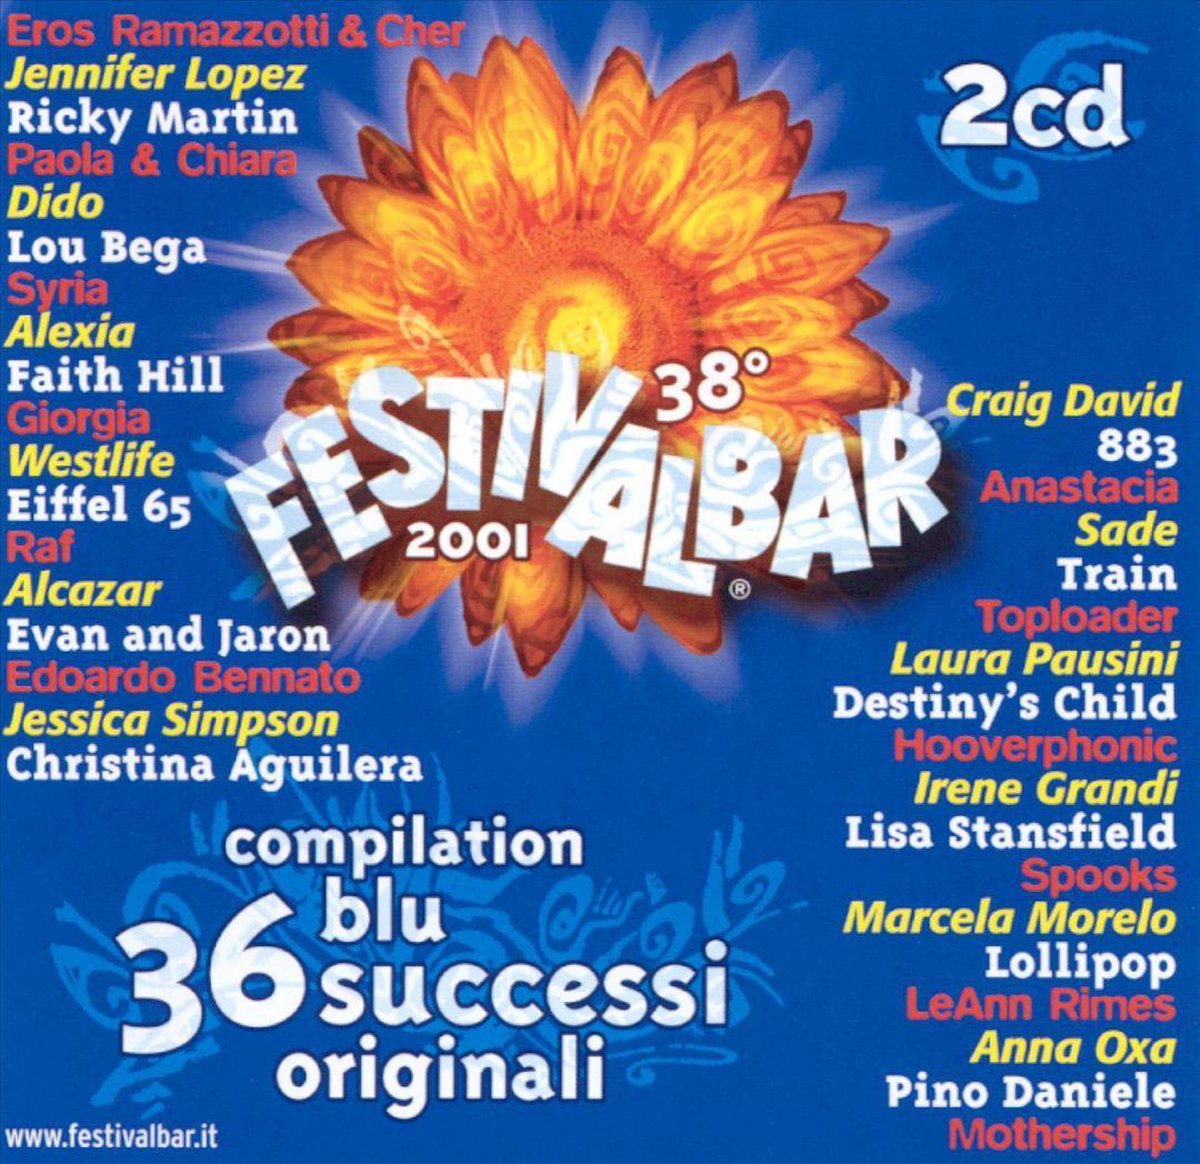 Festivalbar 2001: Compilation Blu - various artists